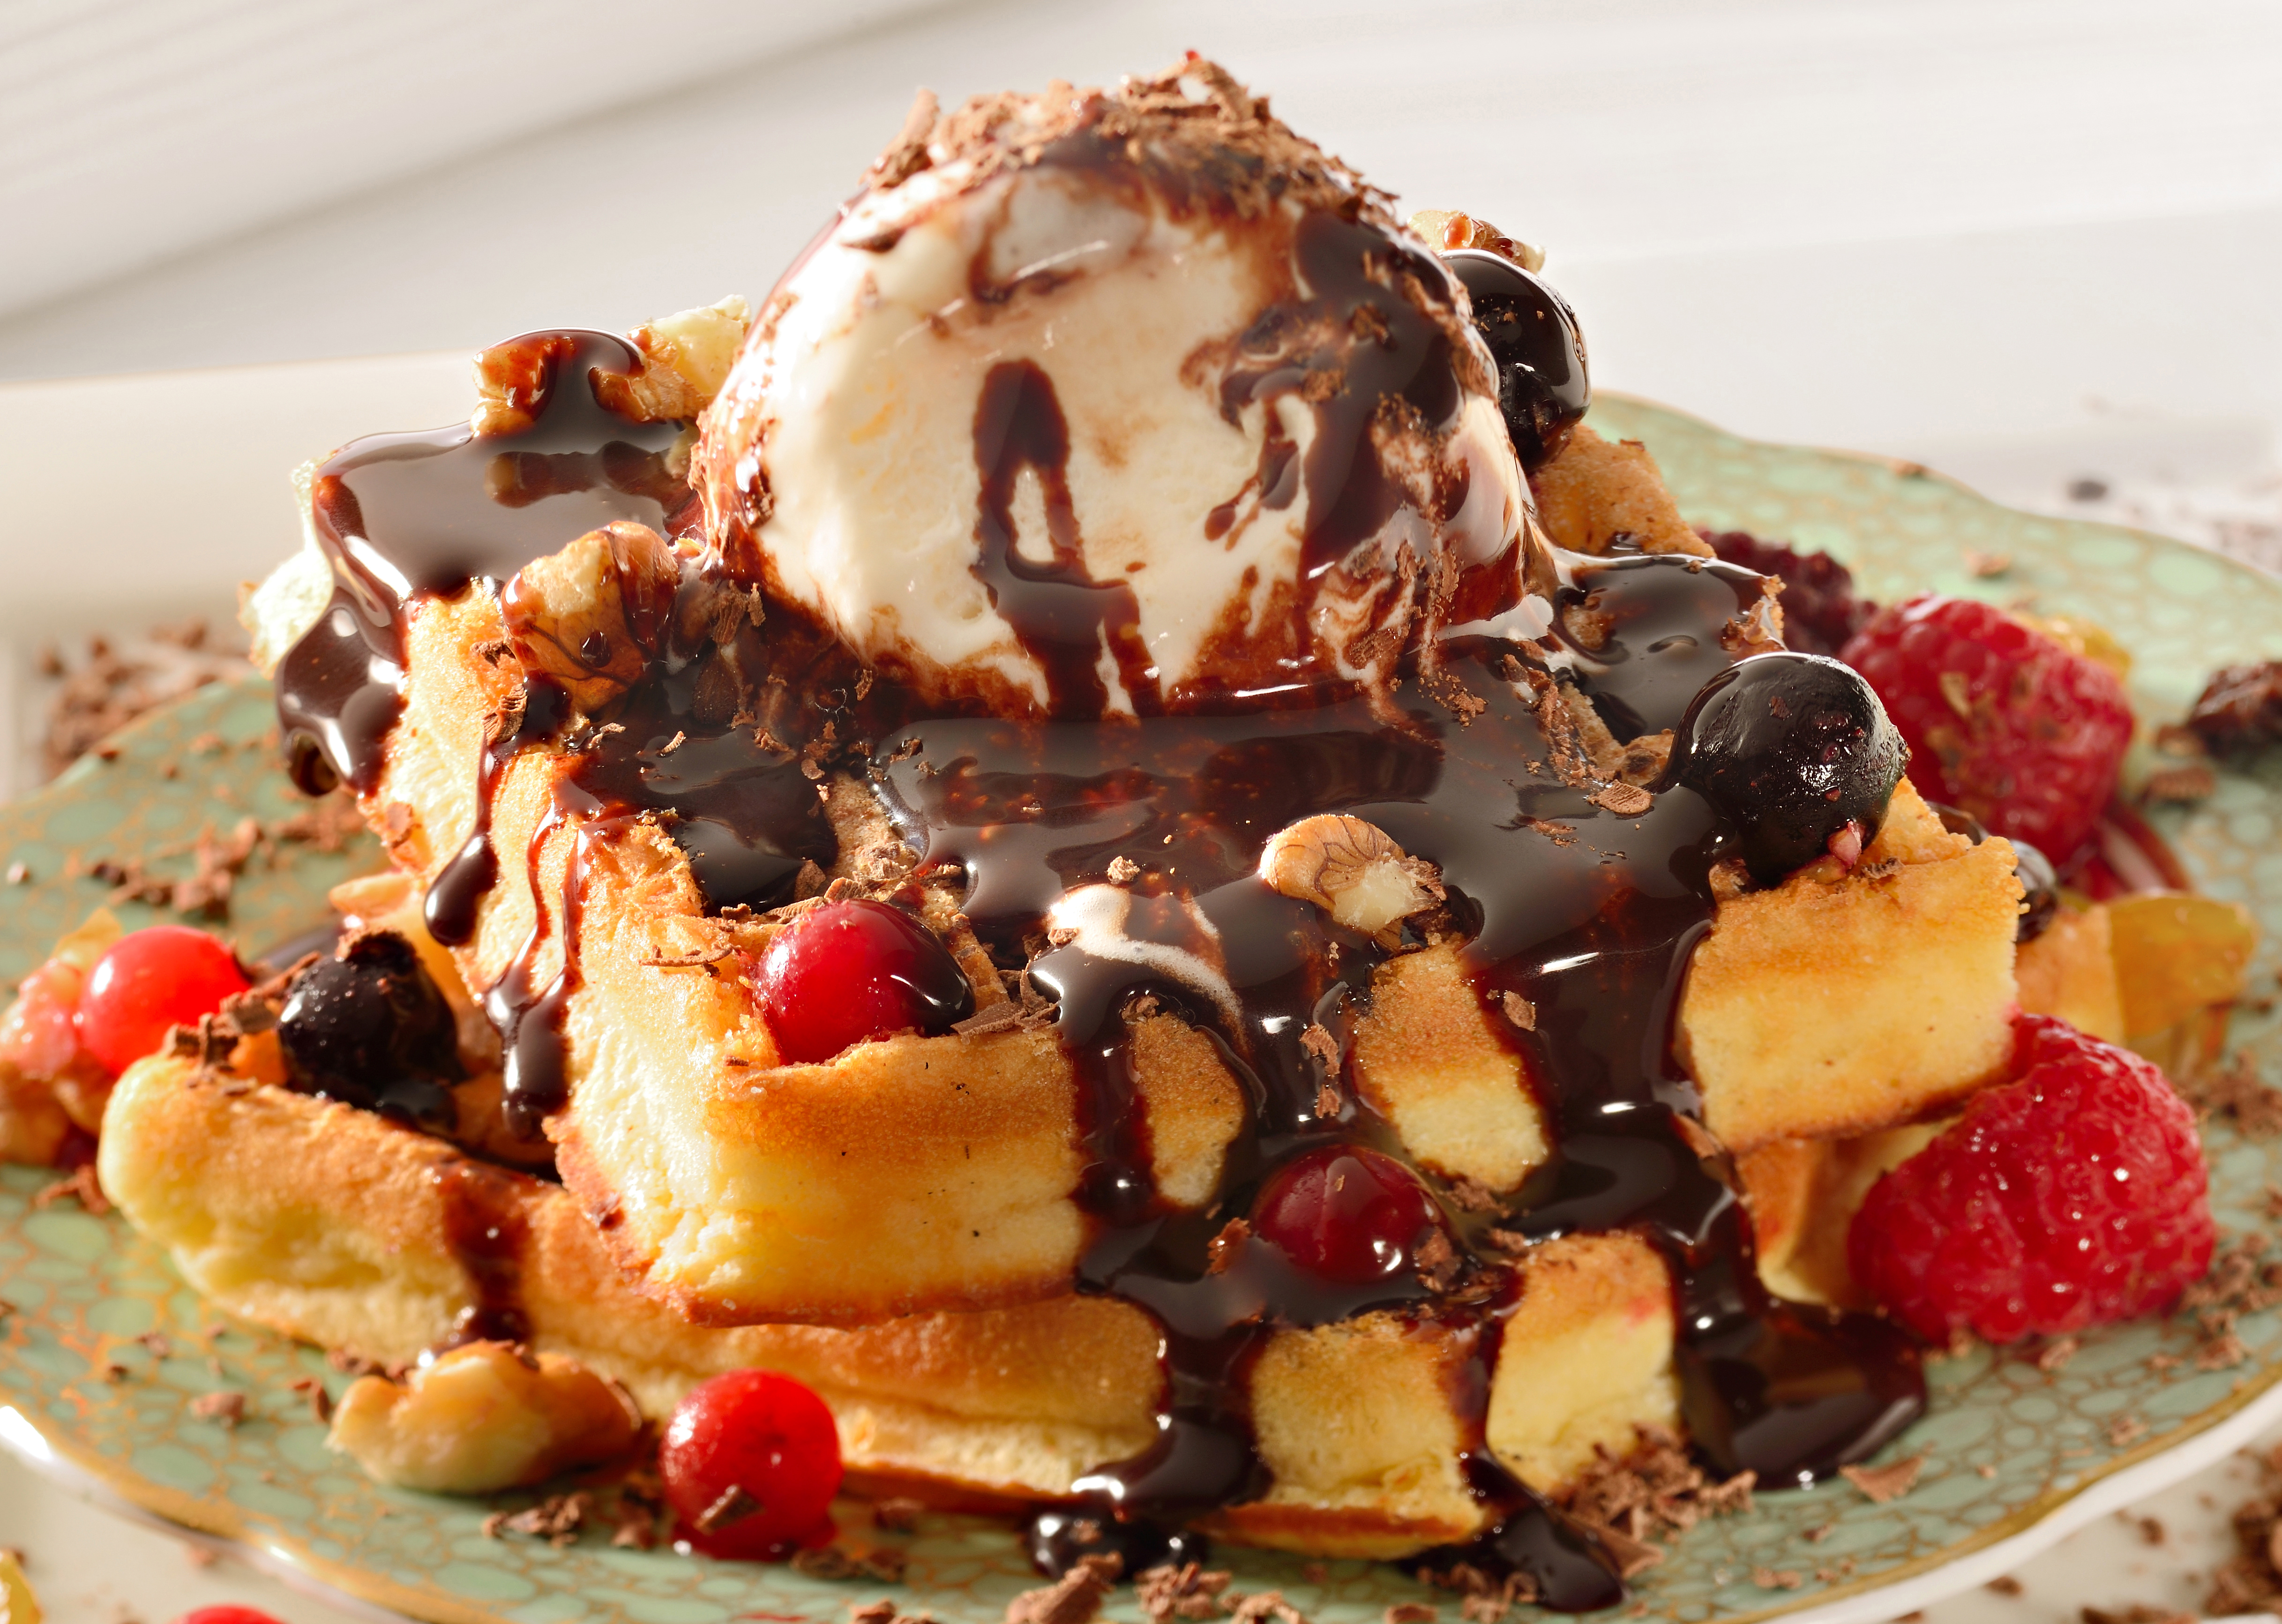 еда вафли мороженое шоколад food waffles chocolate ice cream бесплатно